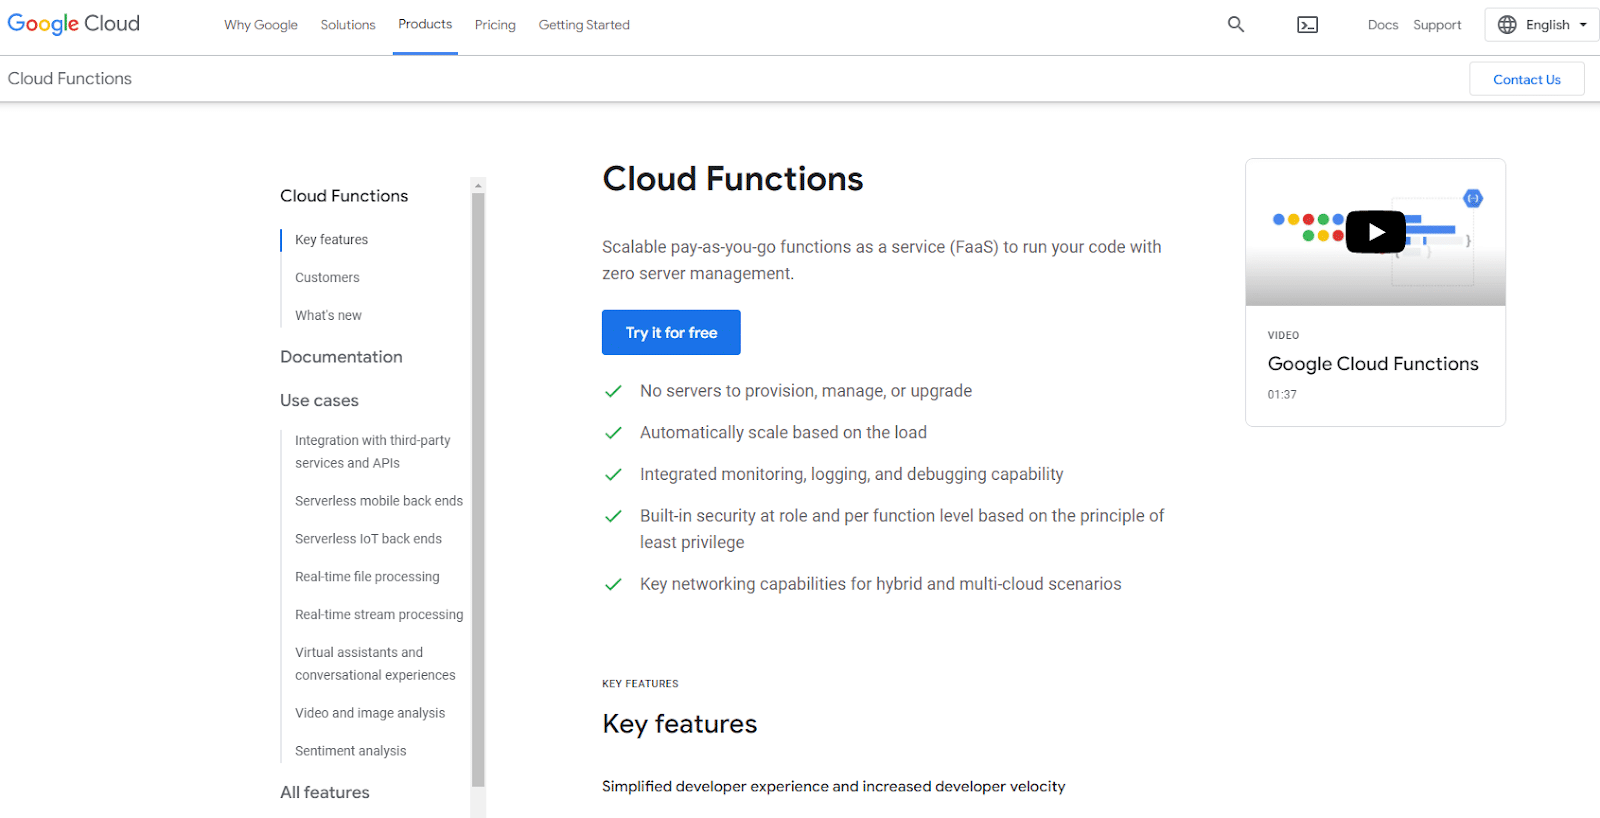 Google Cloud functions